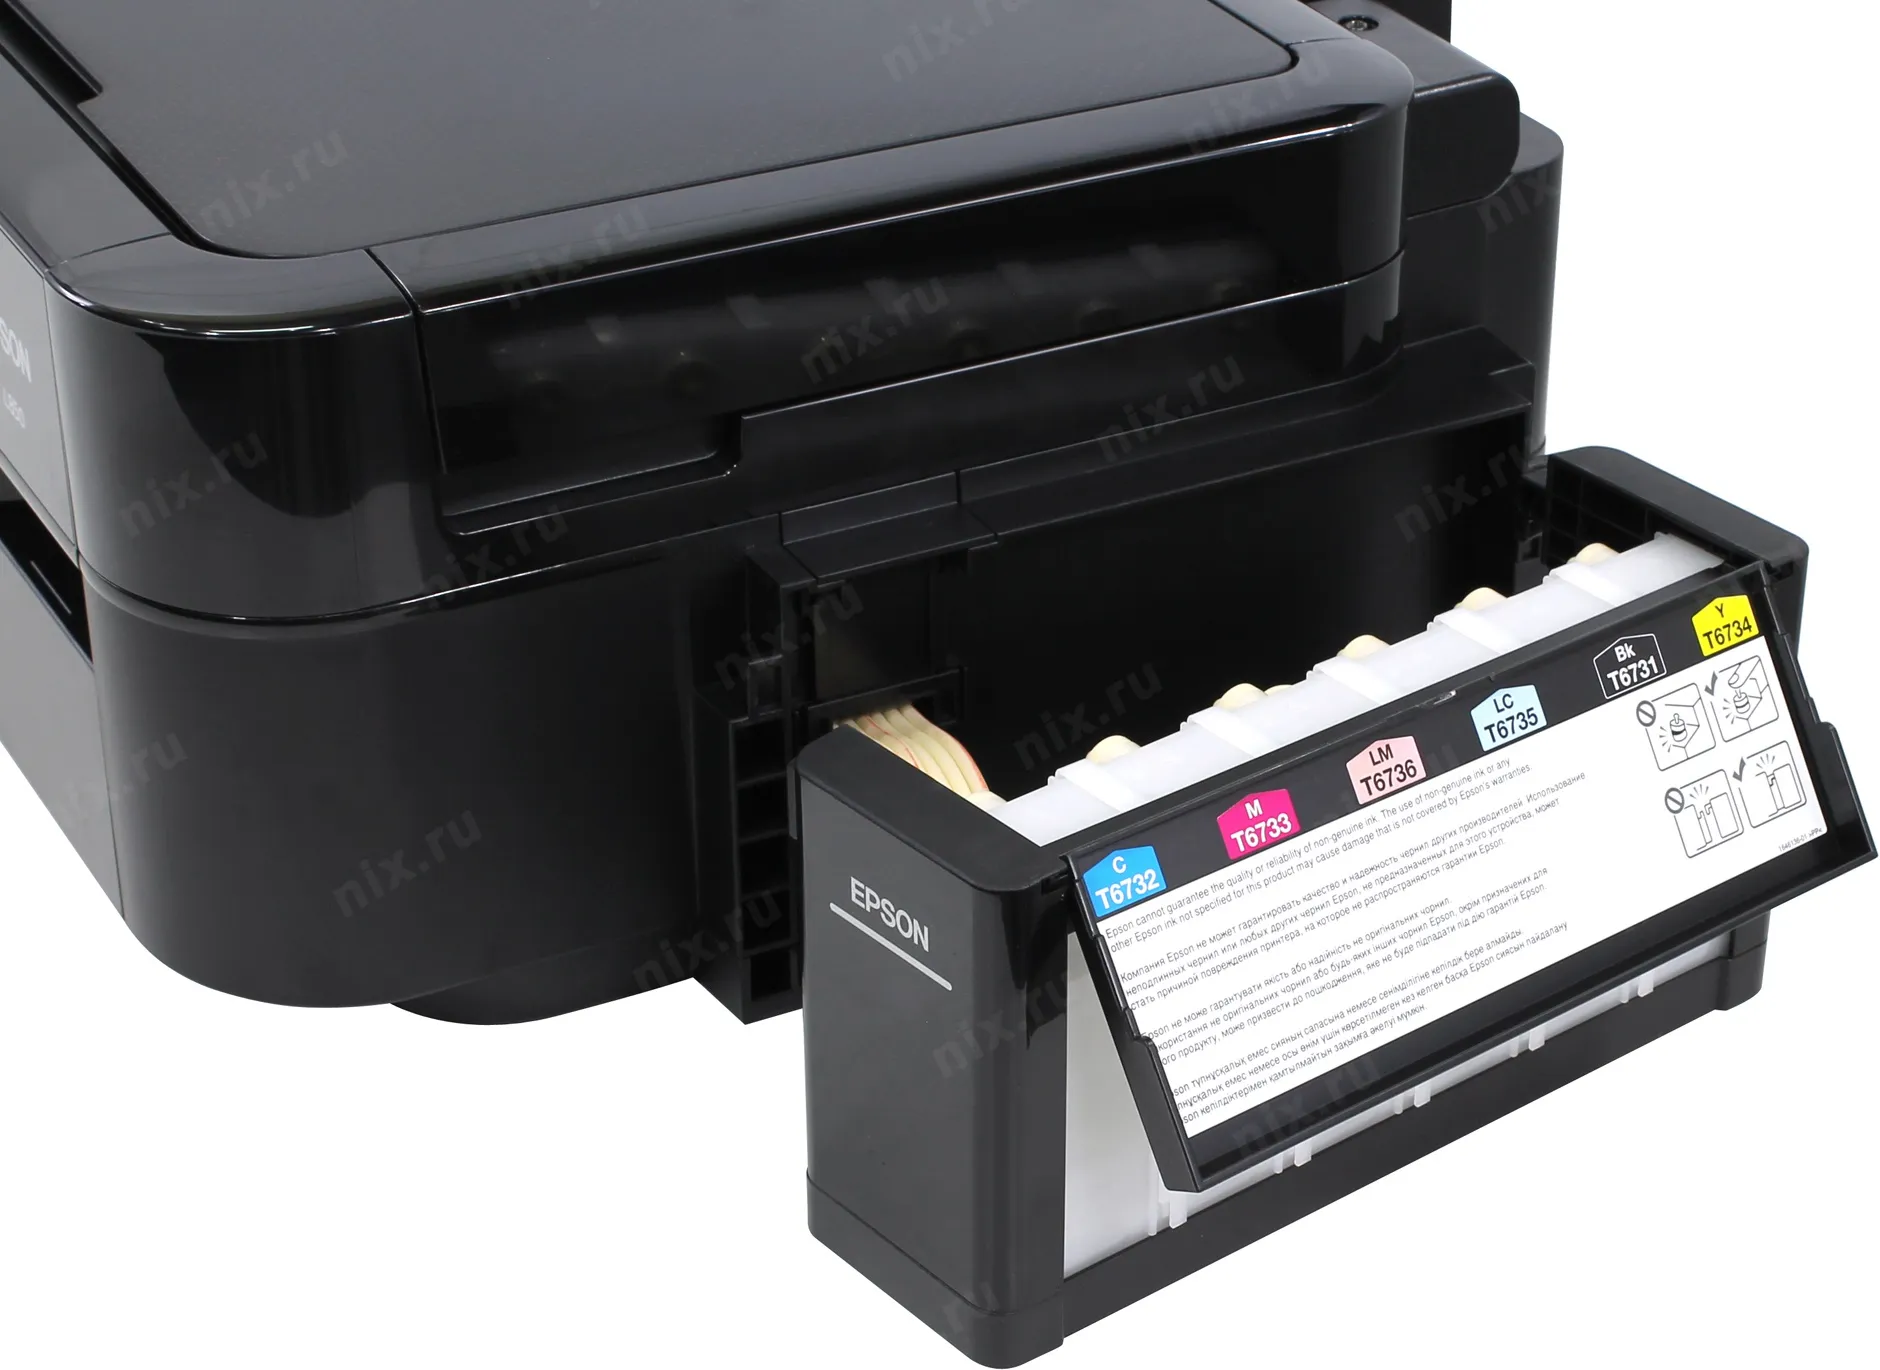 МФУ Epson L850 (A4, струйное МФУ, 37 стр / мин, 5760 optimized dpi, 6 красок, USB2.0, печать на CD / DVD)#2